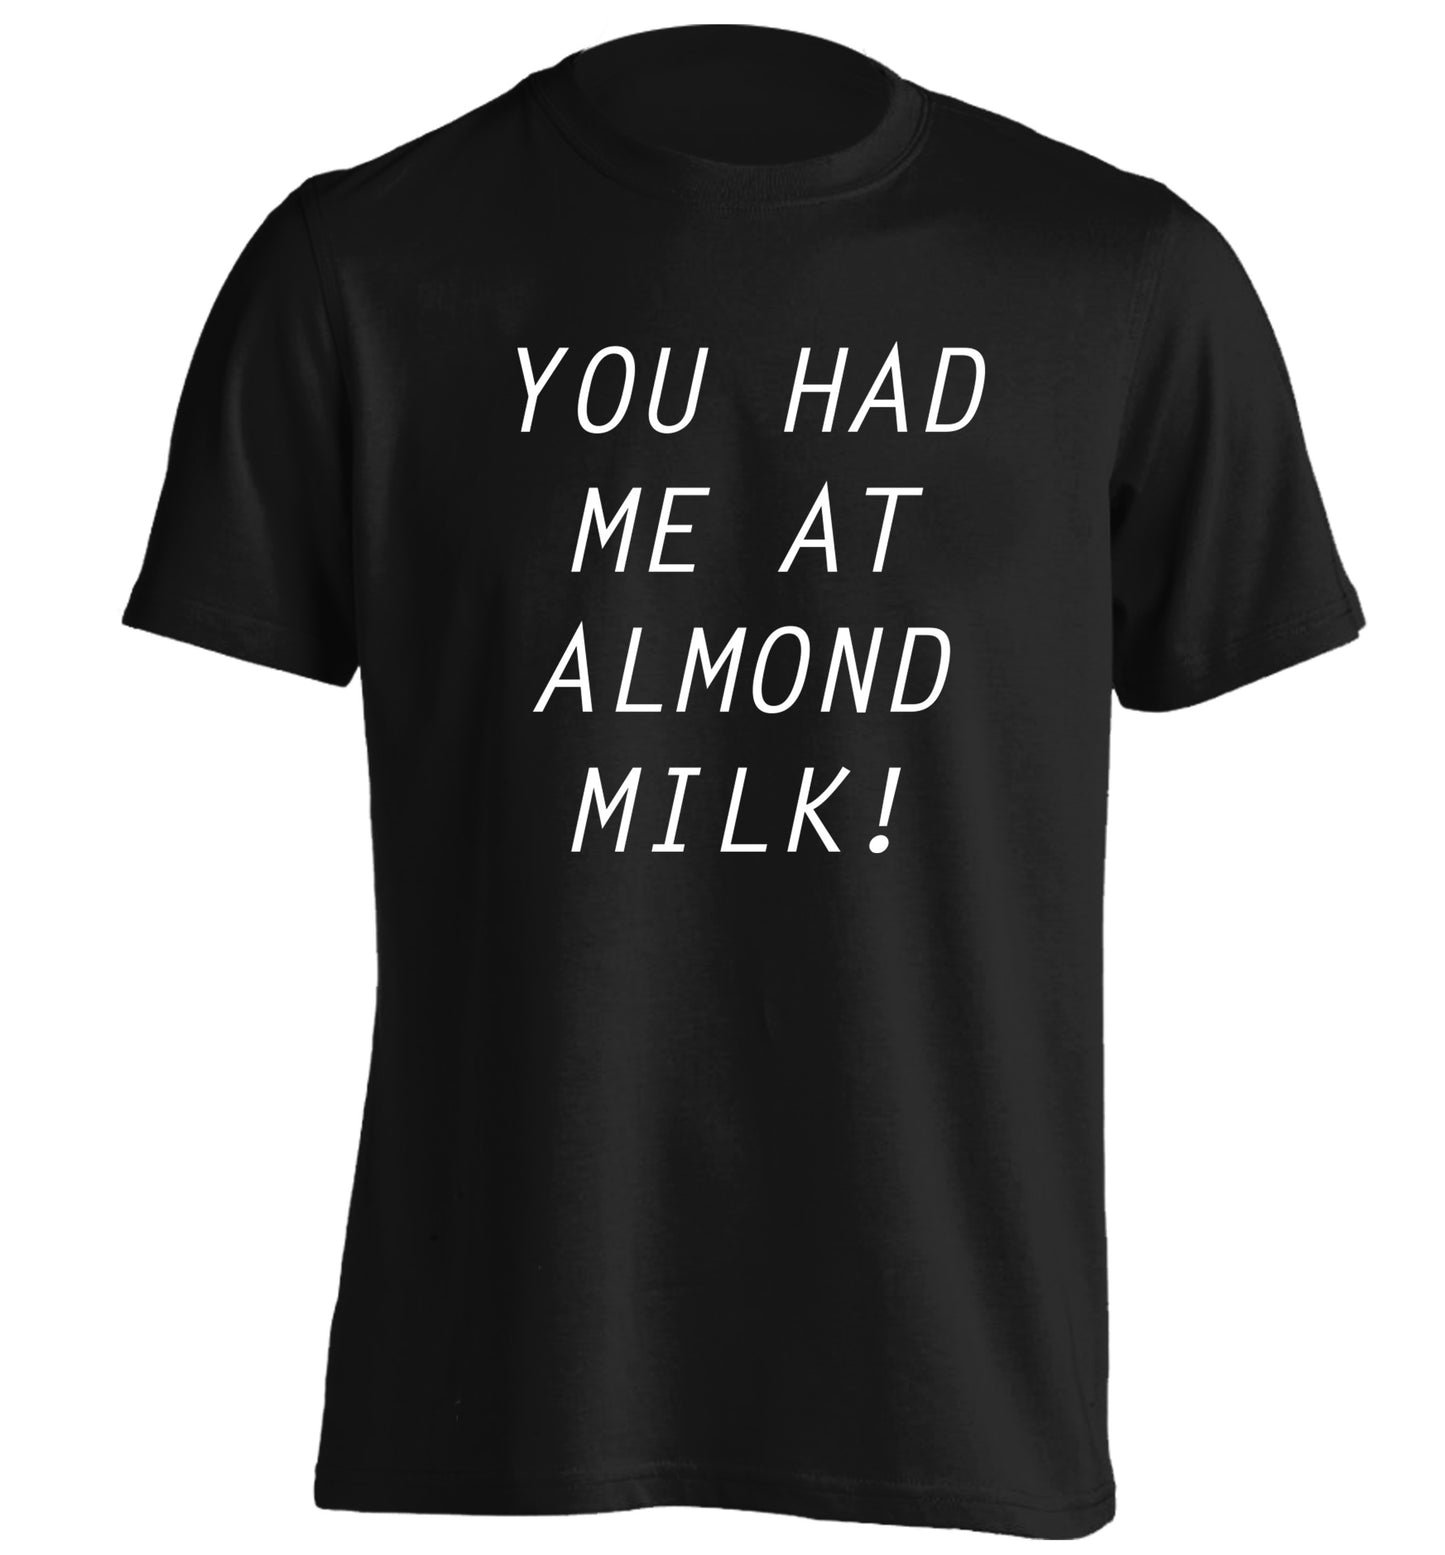 You had me at almond milk adults unisex black Tshirt 2XL